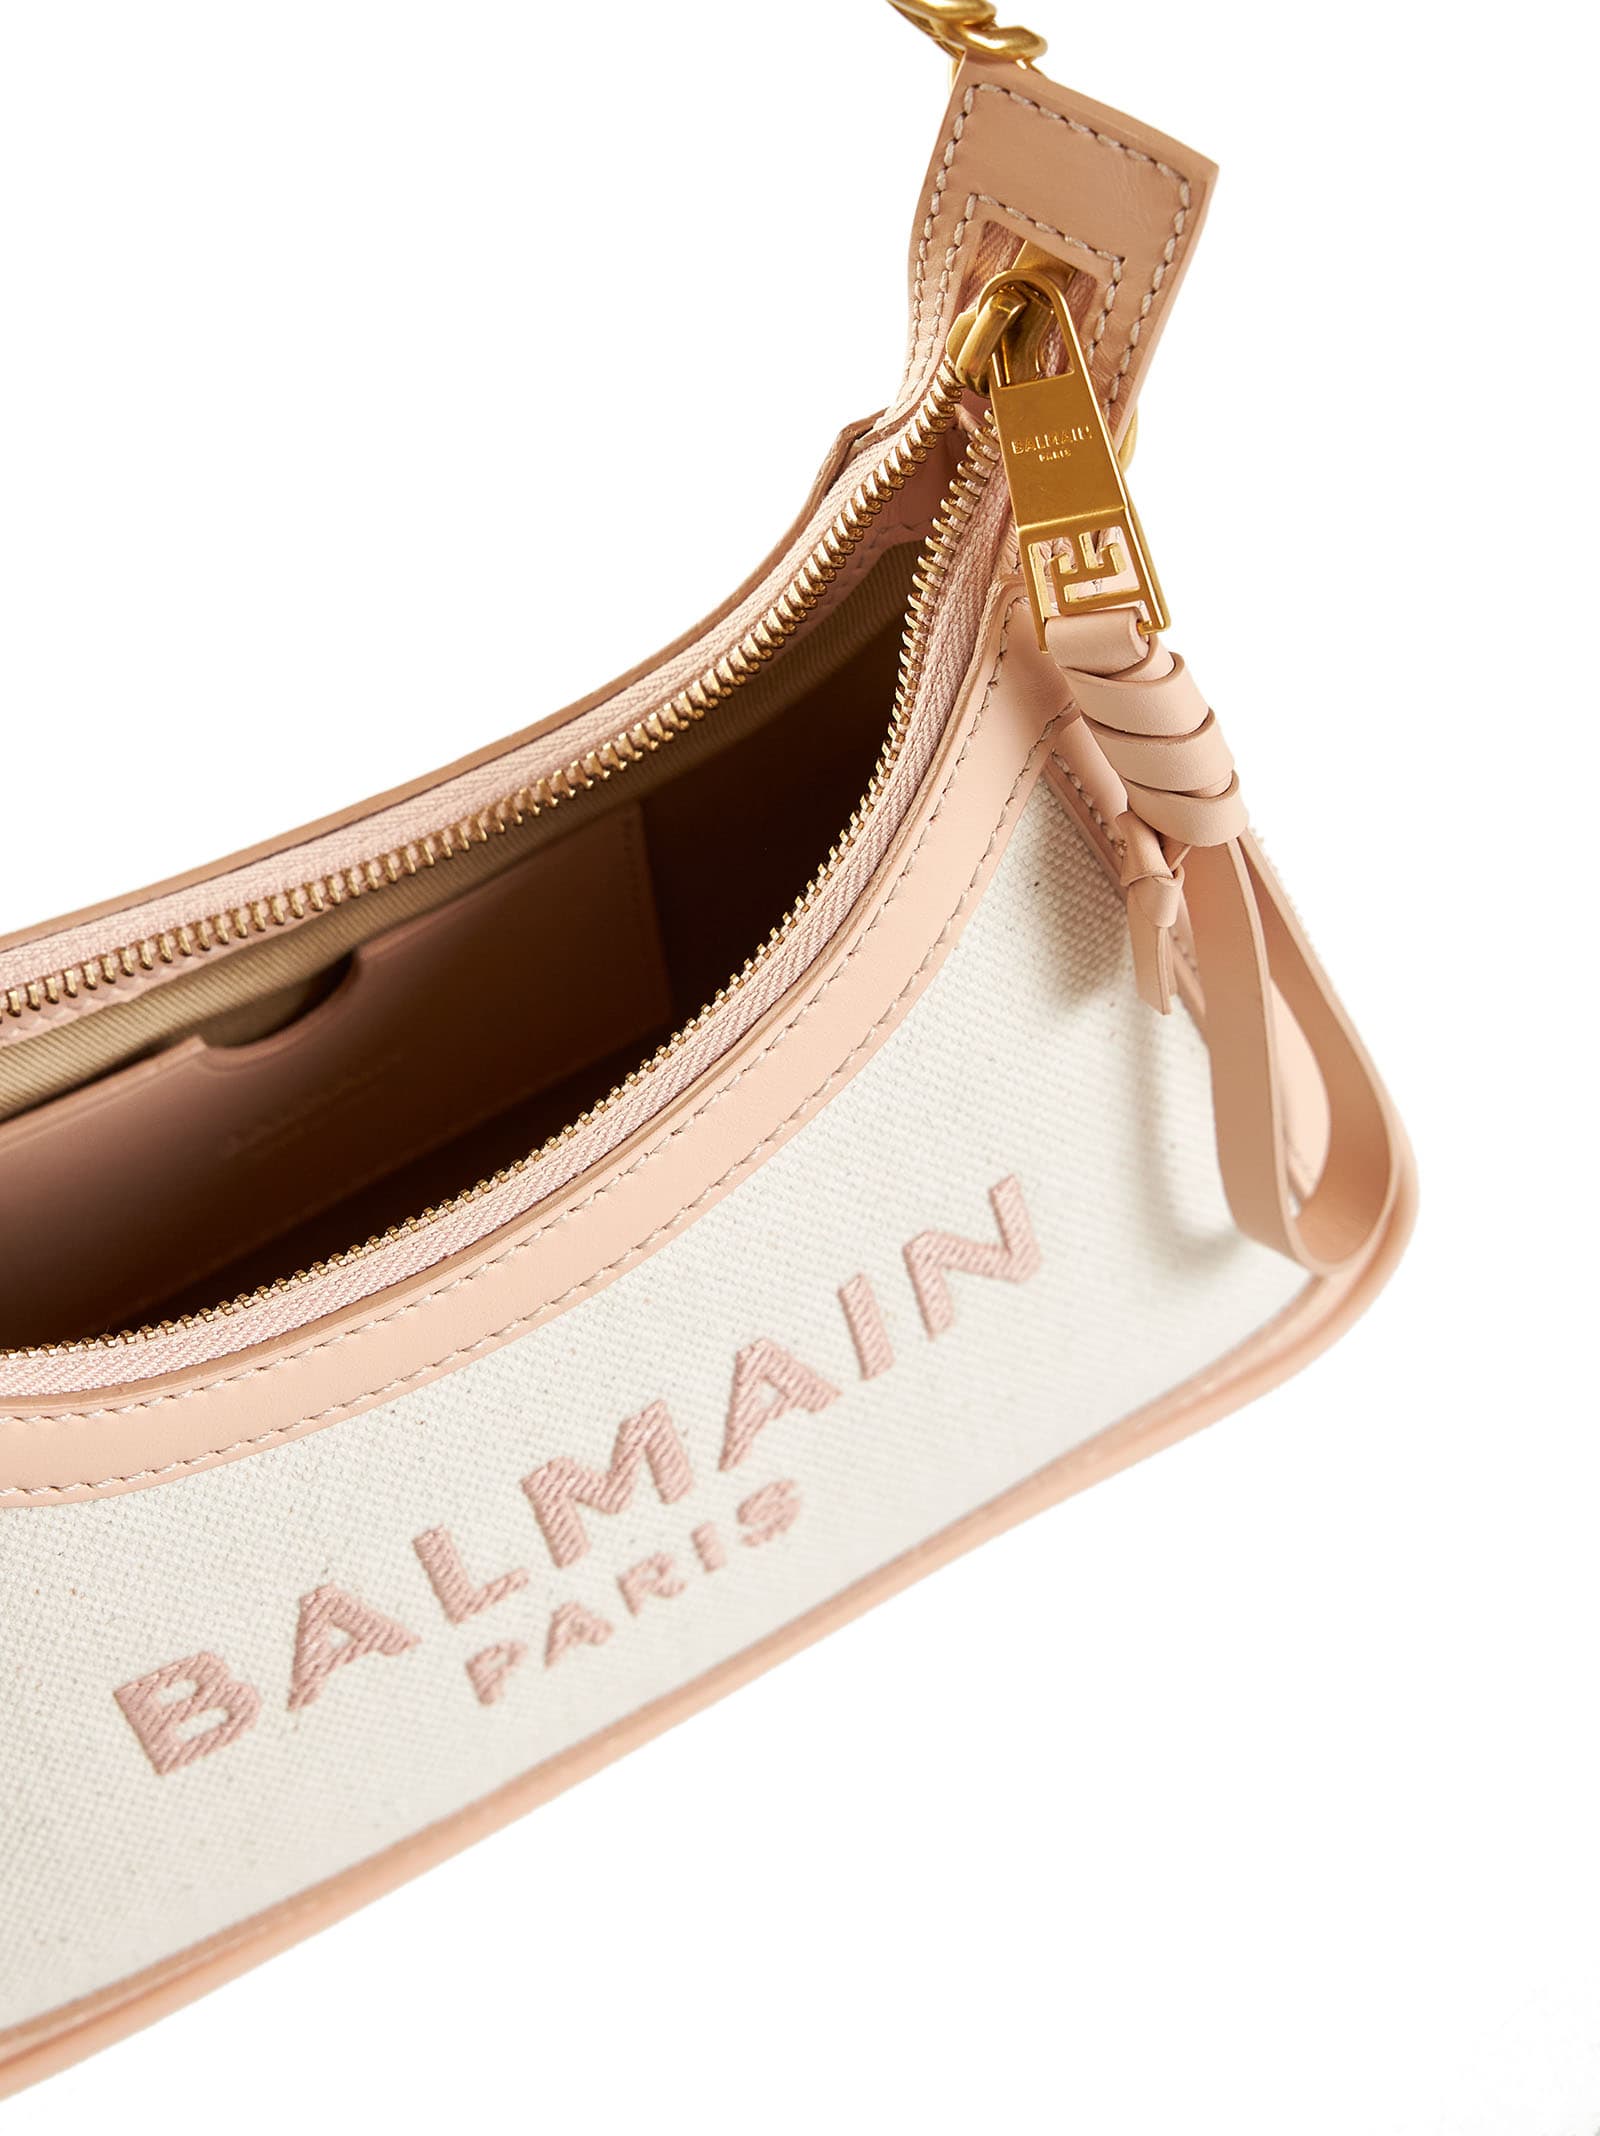 Shop Balmain Shoulder Bag In Creme/nude Rosè